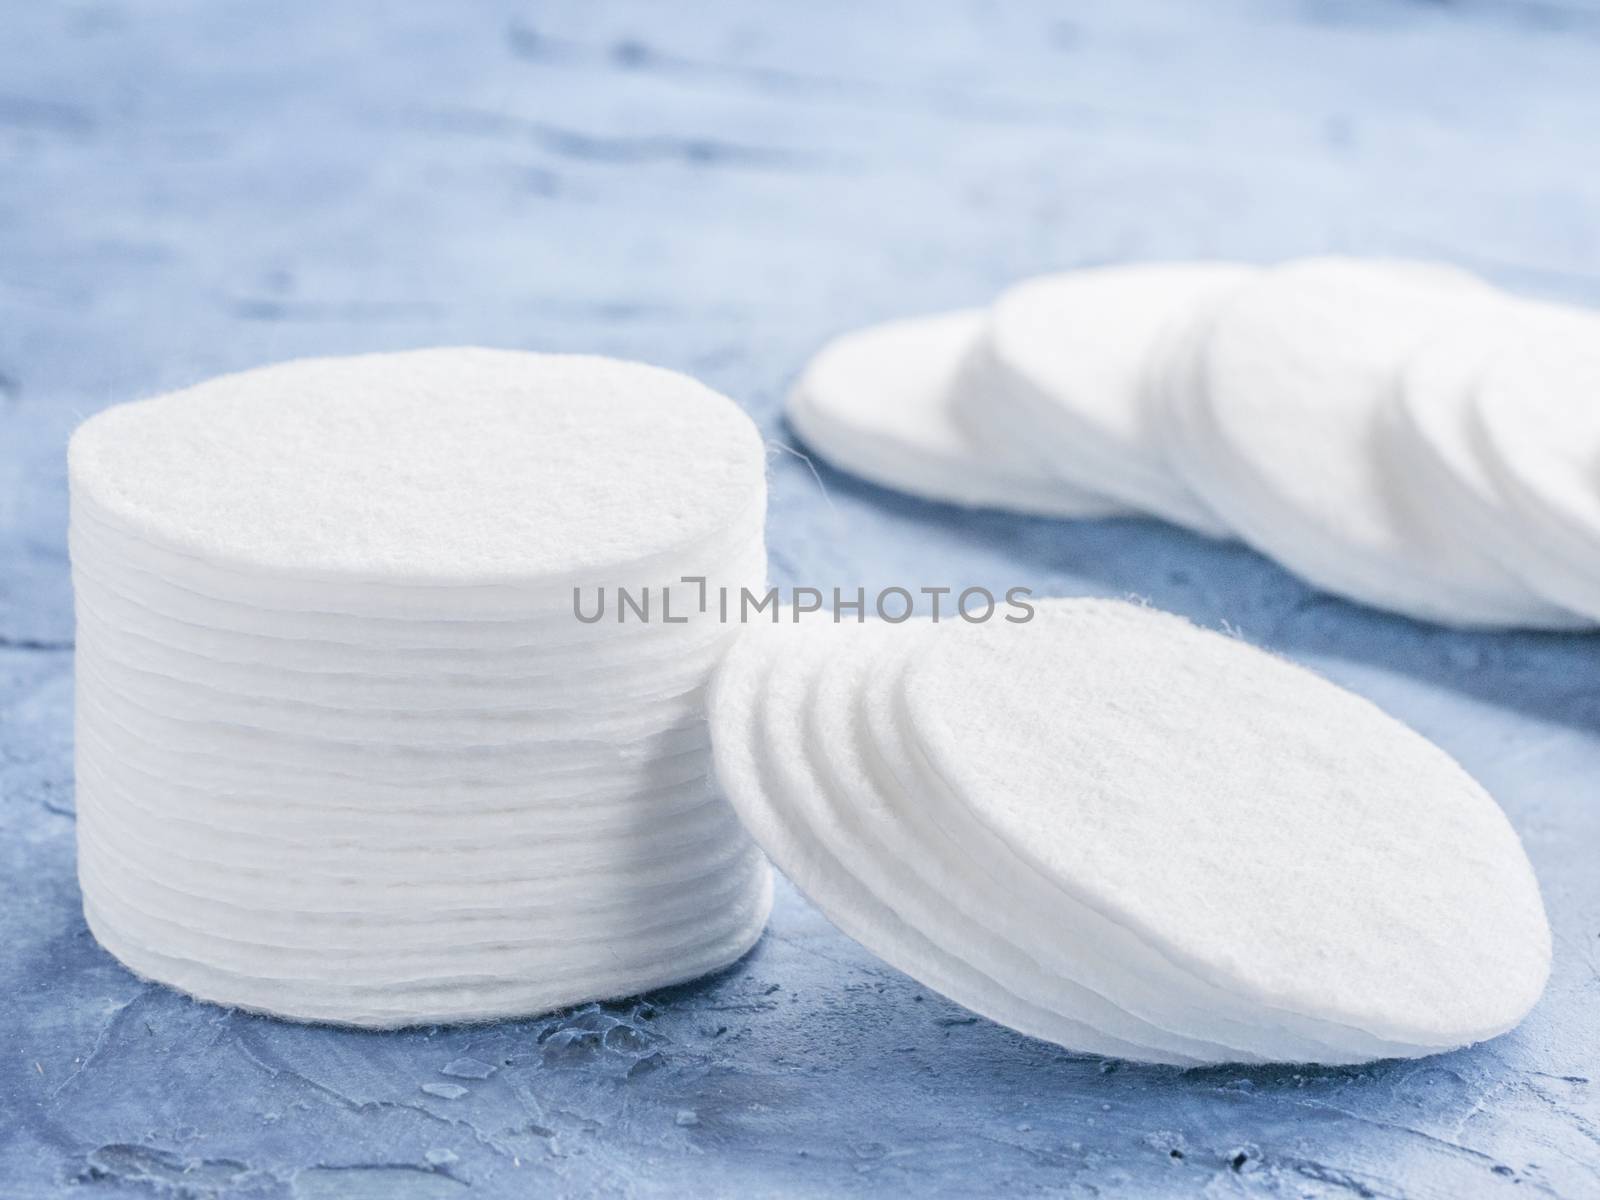 cotton pads on blue concrete background by fascinadora